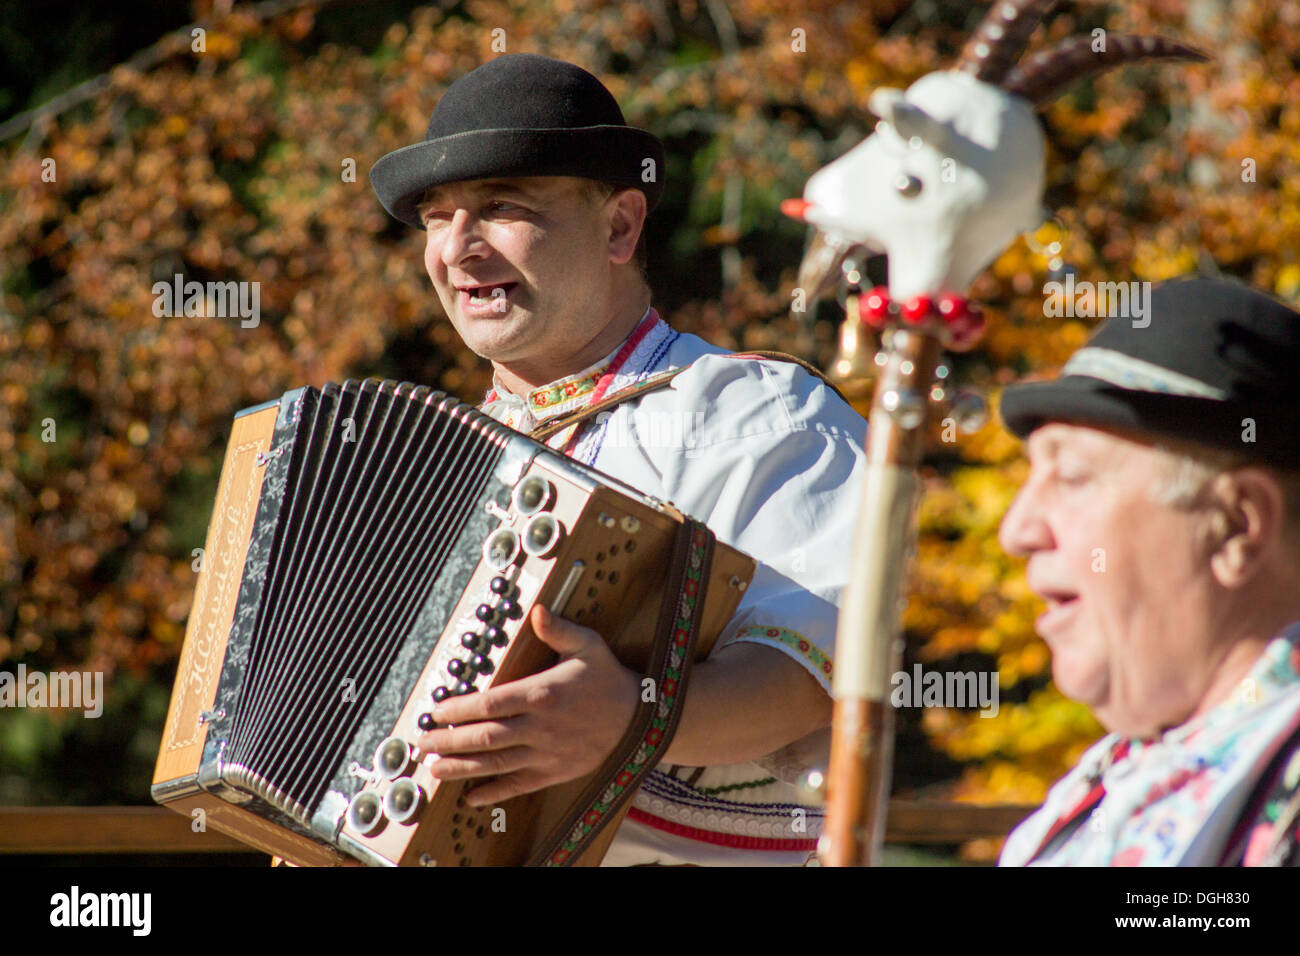 Singing men with accordion Stock Photo